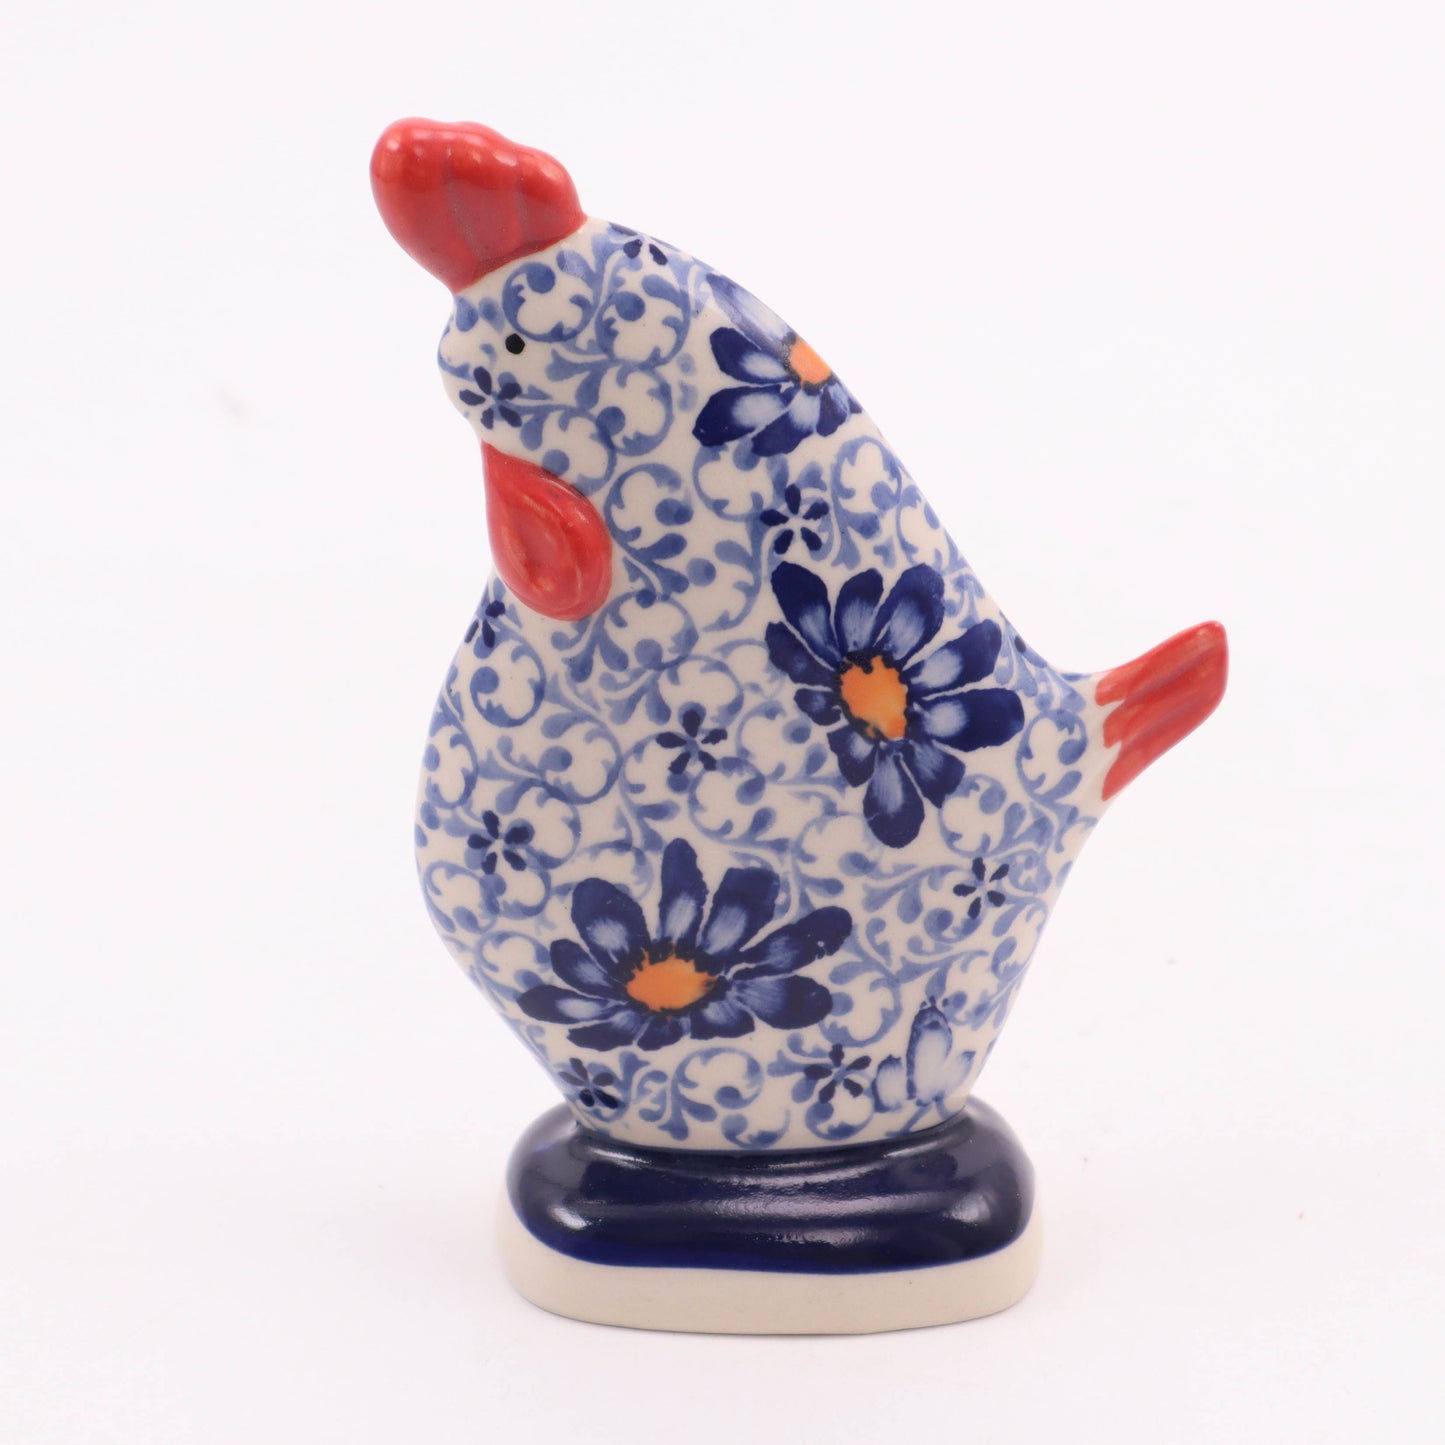 4"x6" Rooster Figurine. Pattern: Daisy Serenade